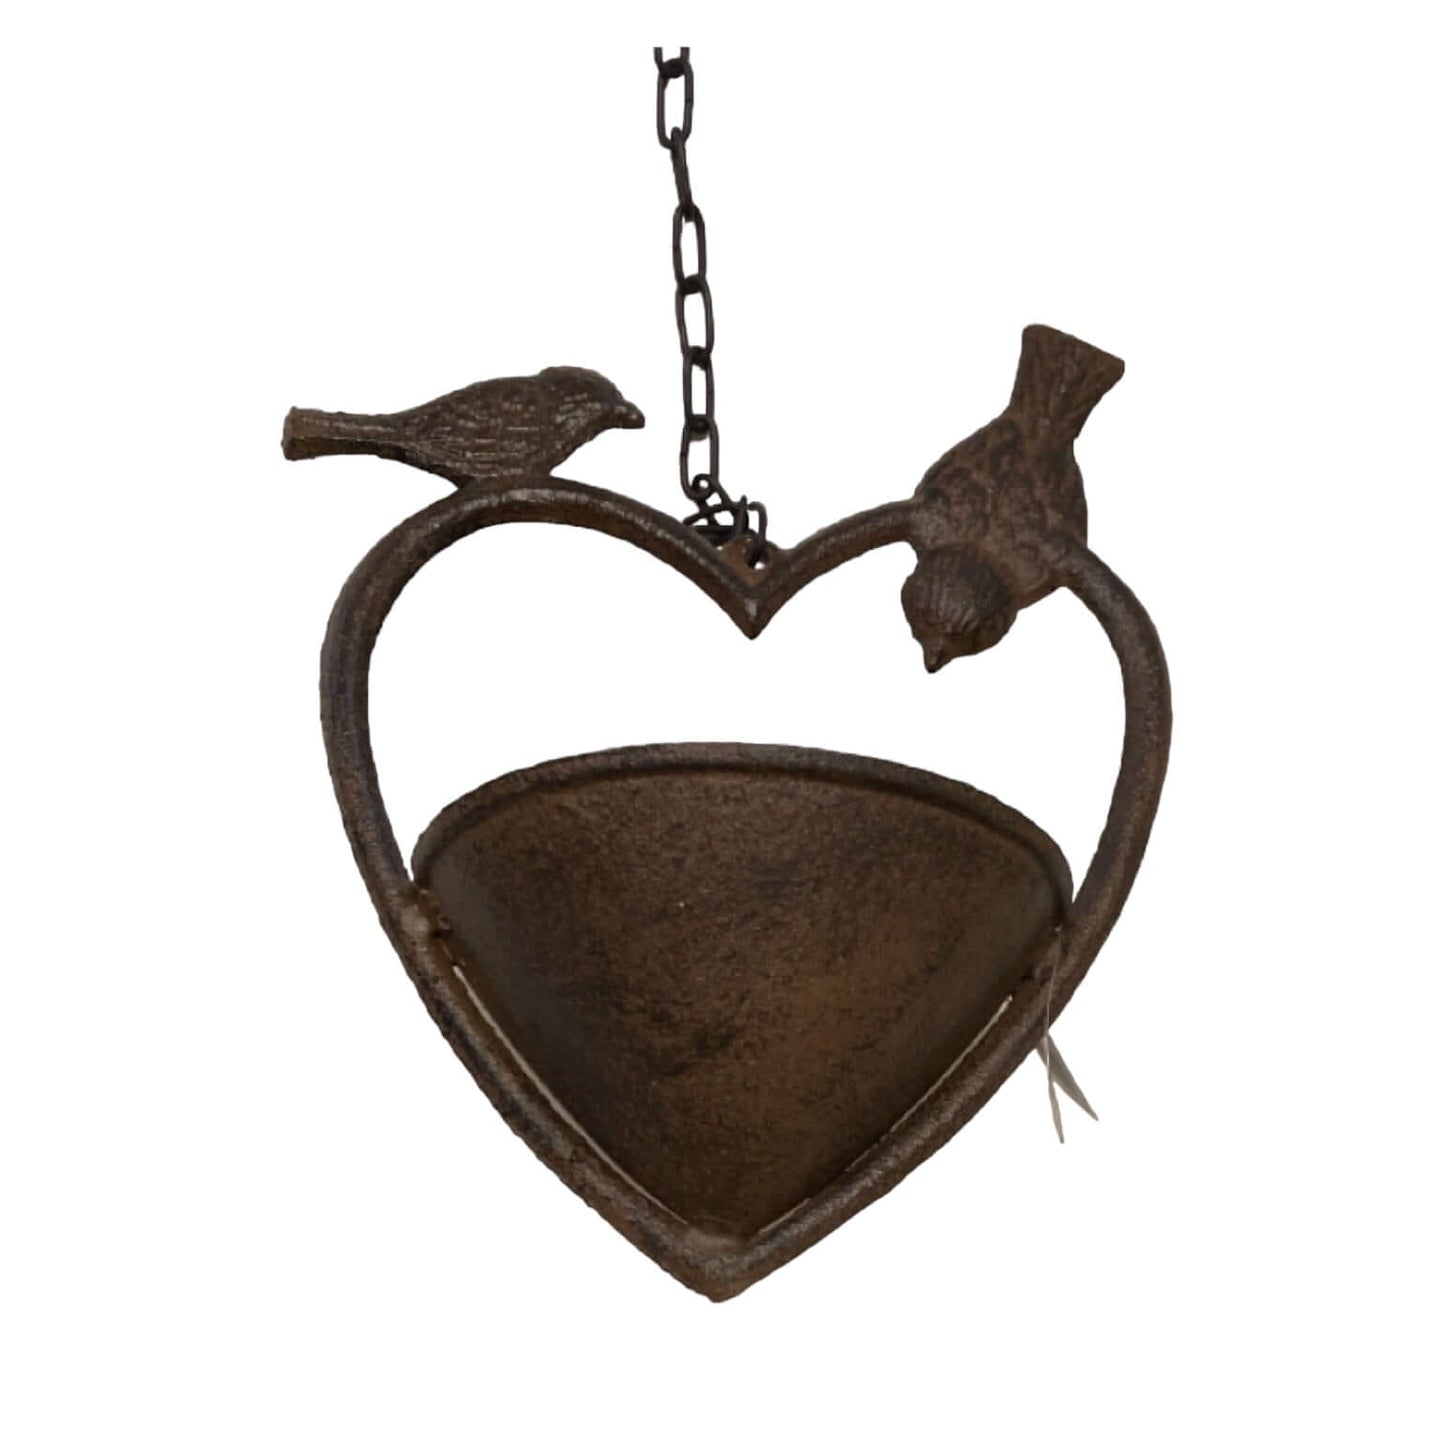 Bird Feeder Hanging Heart Love - The Renmy Store Homewares & Gifts 